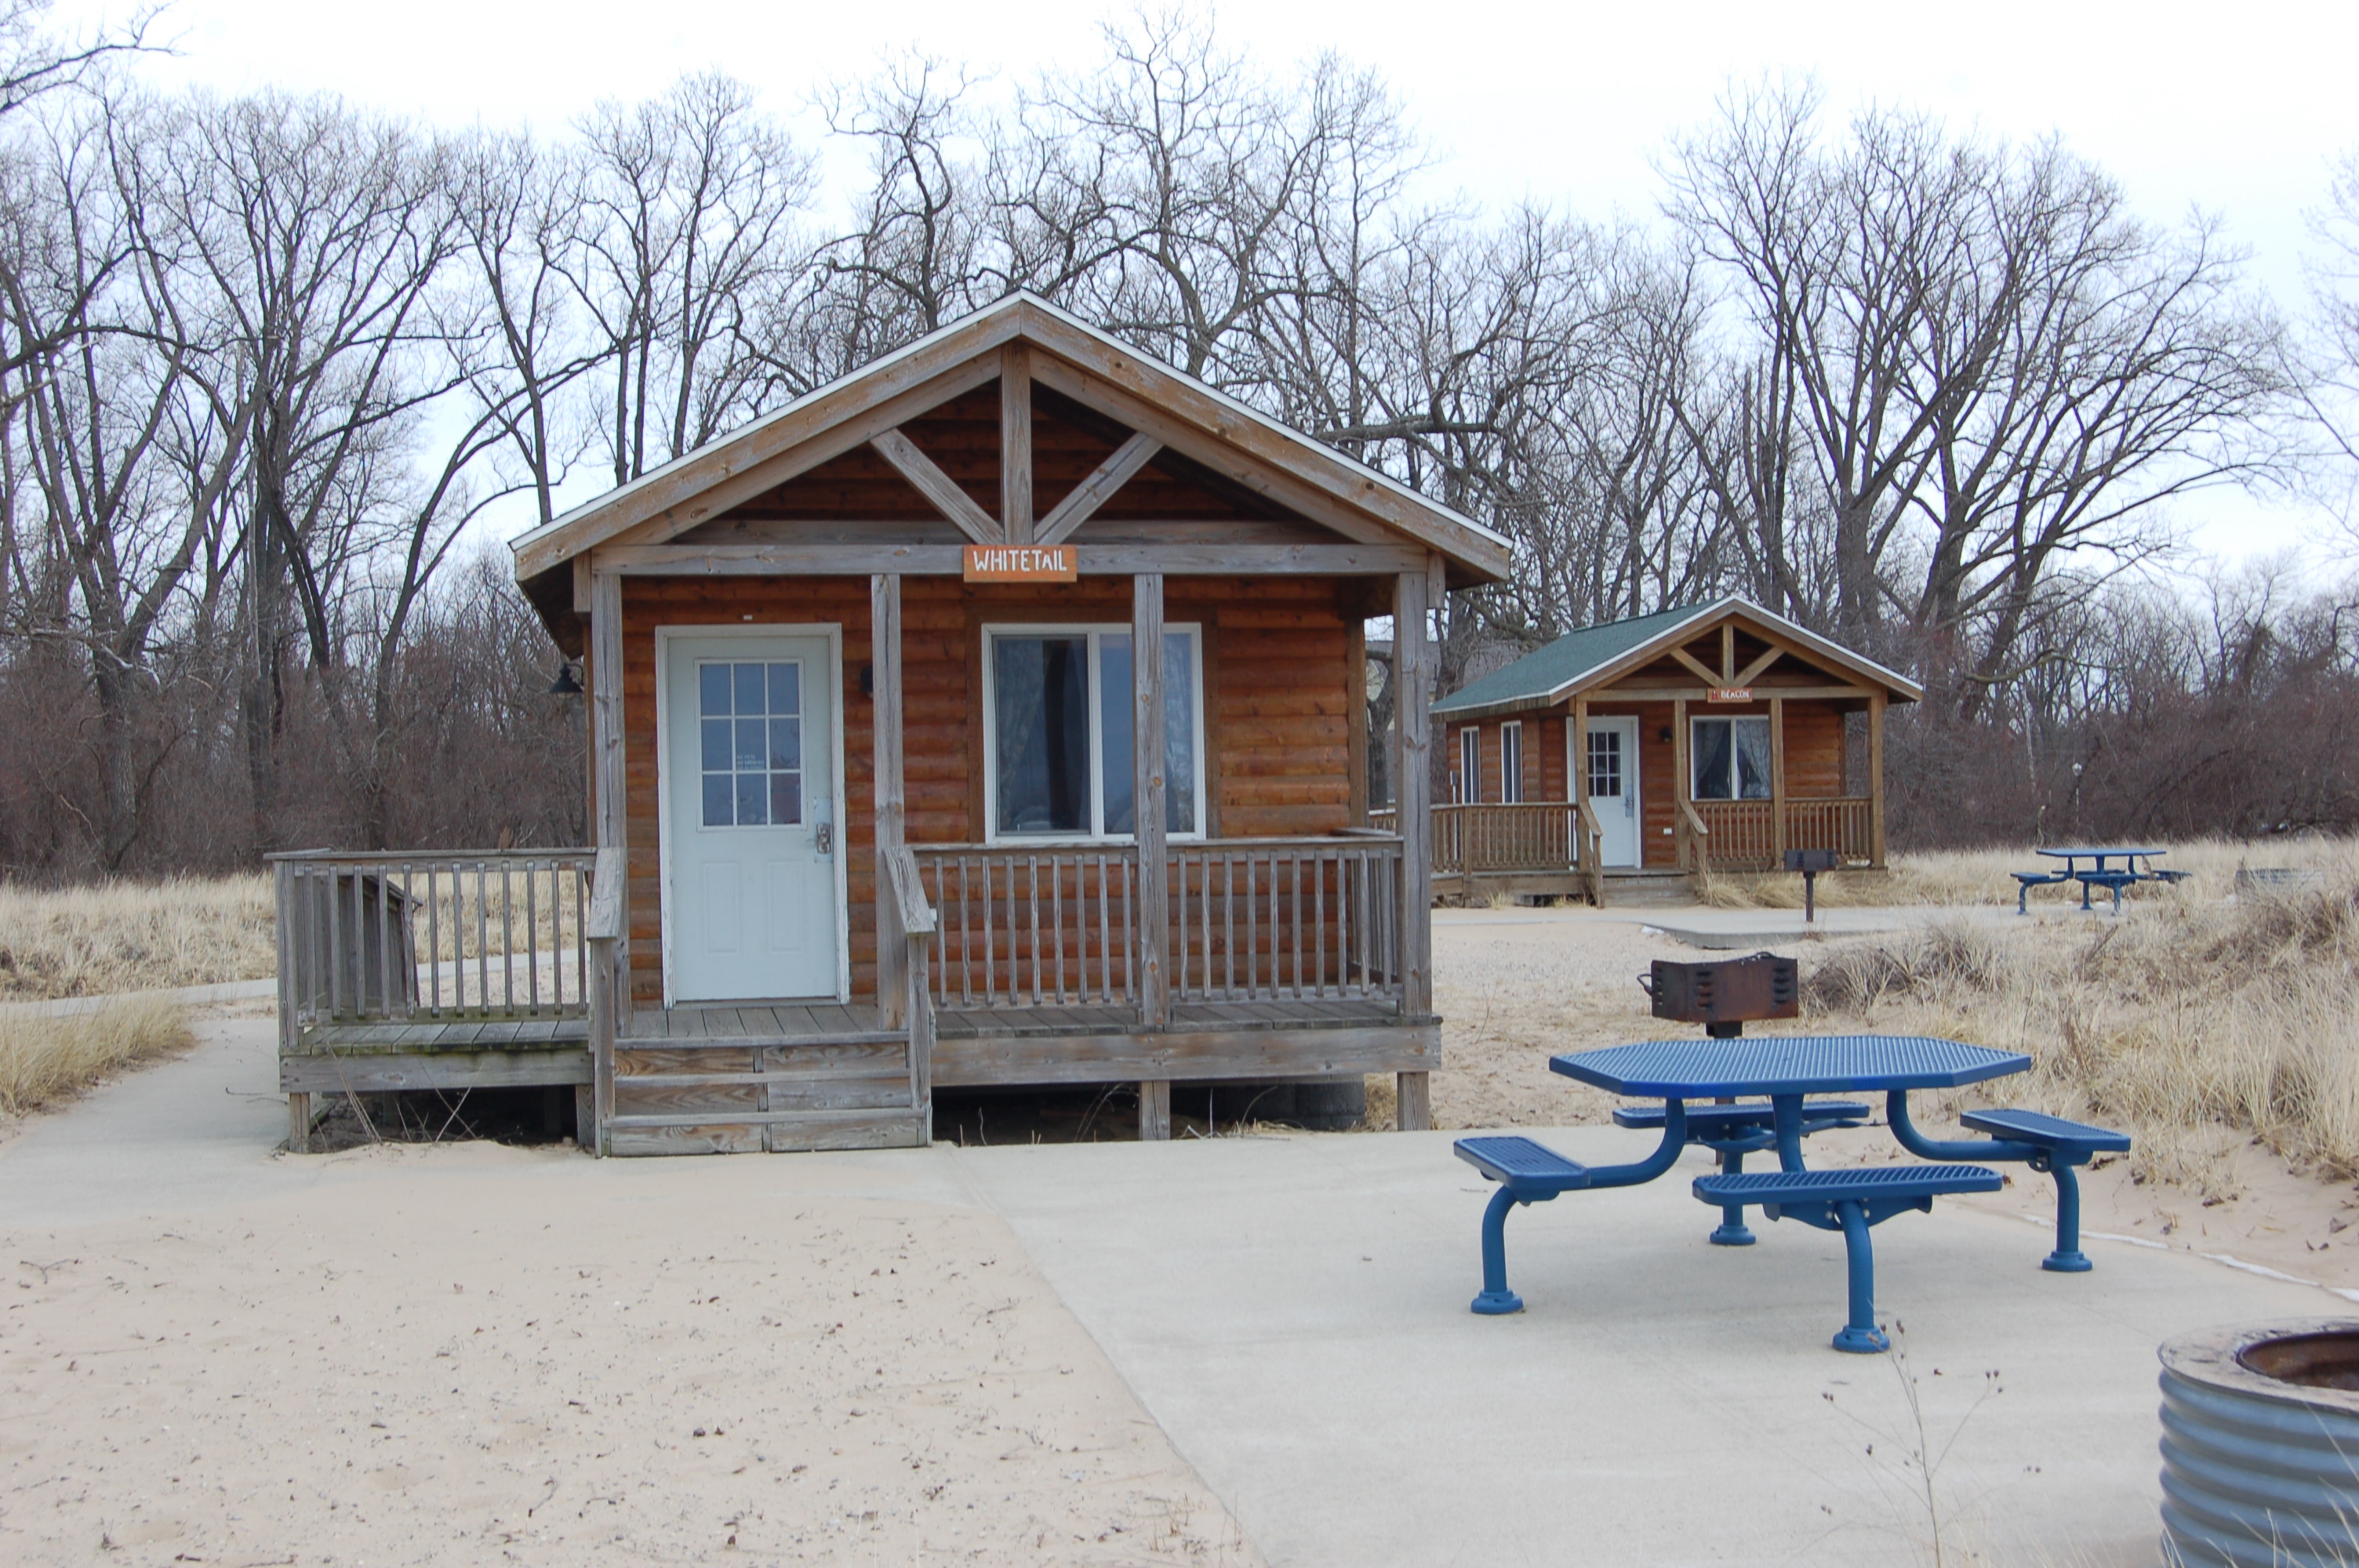 Michigan State Park Mini Cabins and Camper Cabins - Travel the Mitten